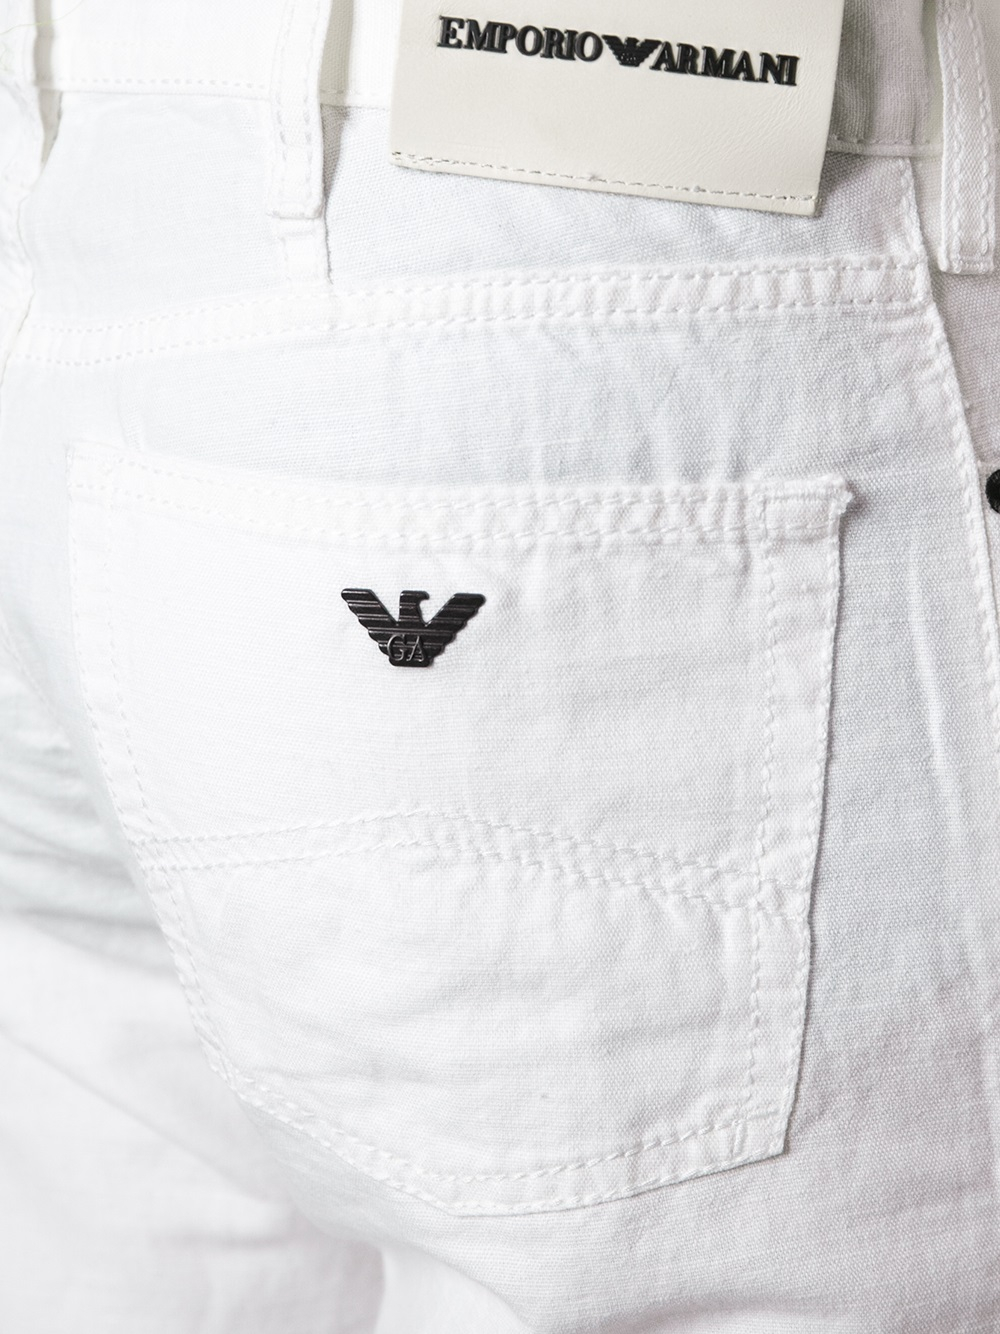 armani white jeans - 64% OFF 